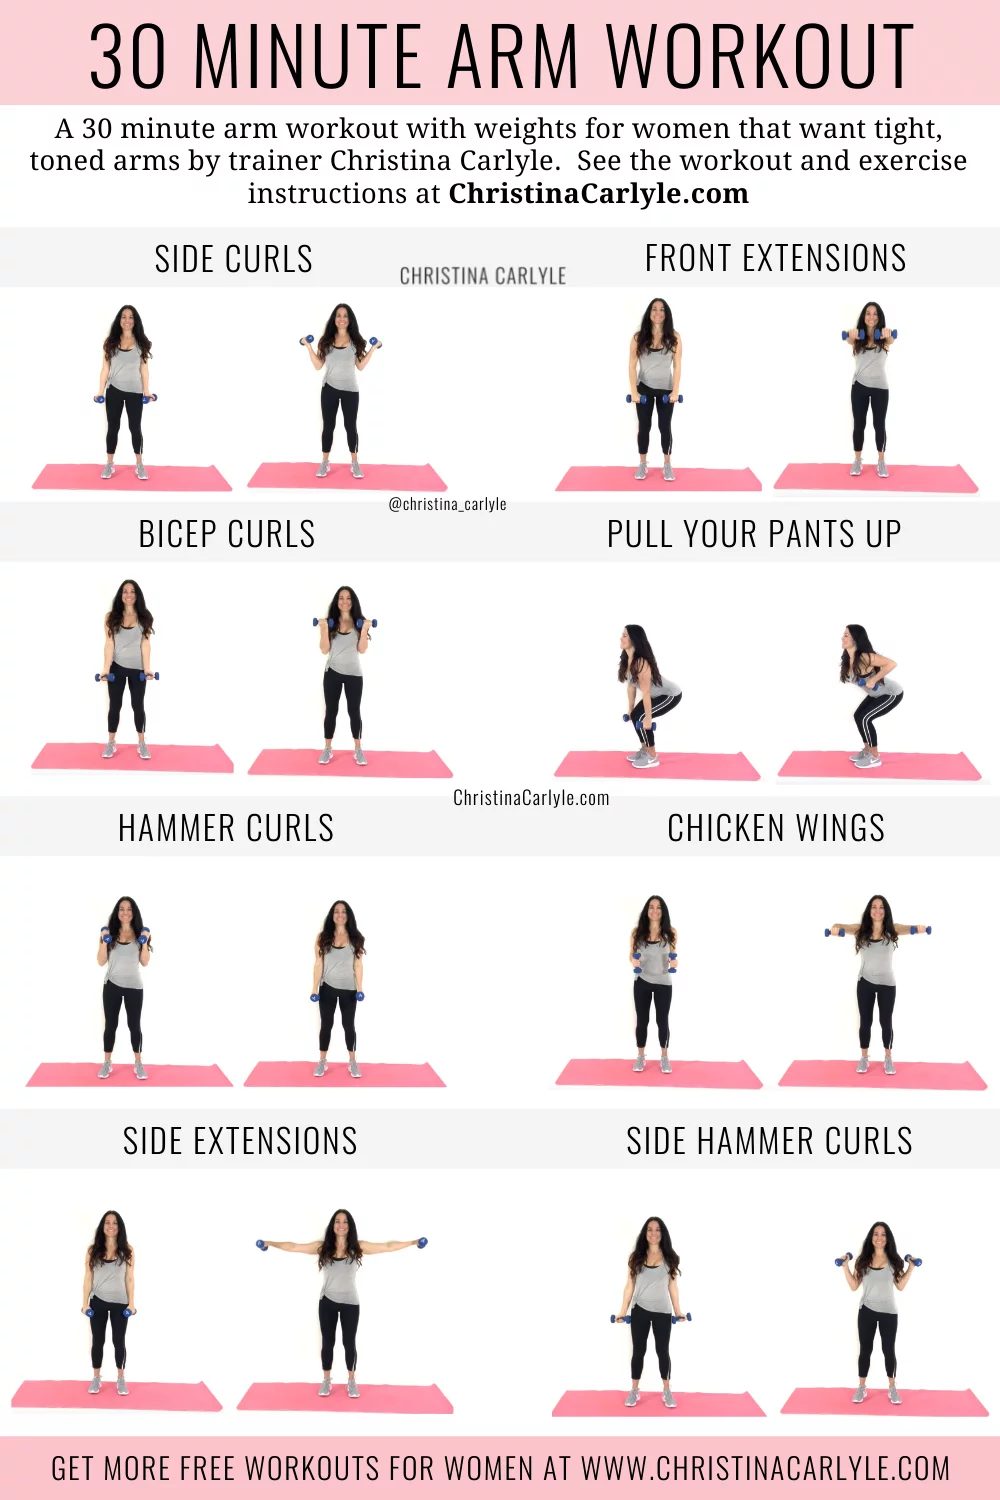 dumbbell arm exercises